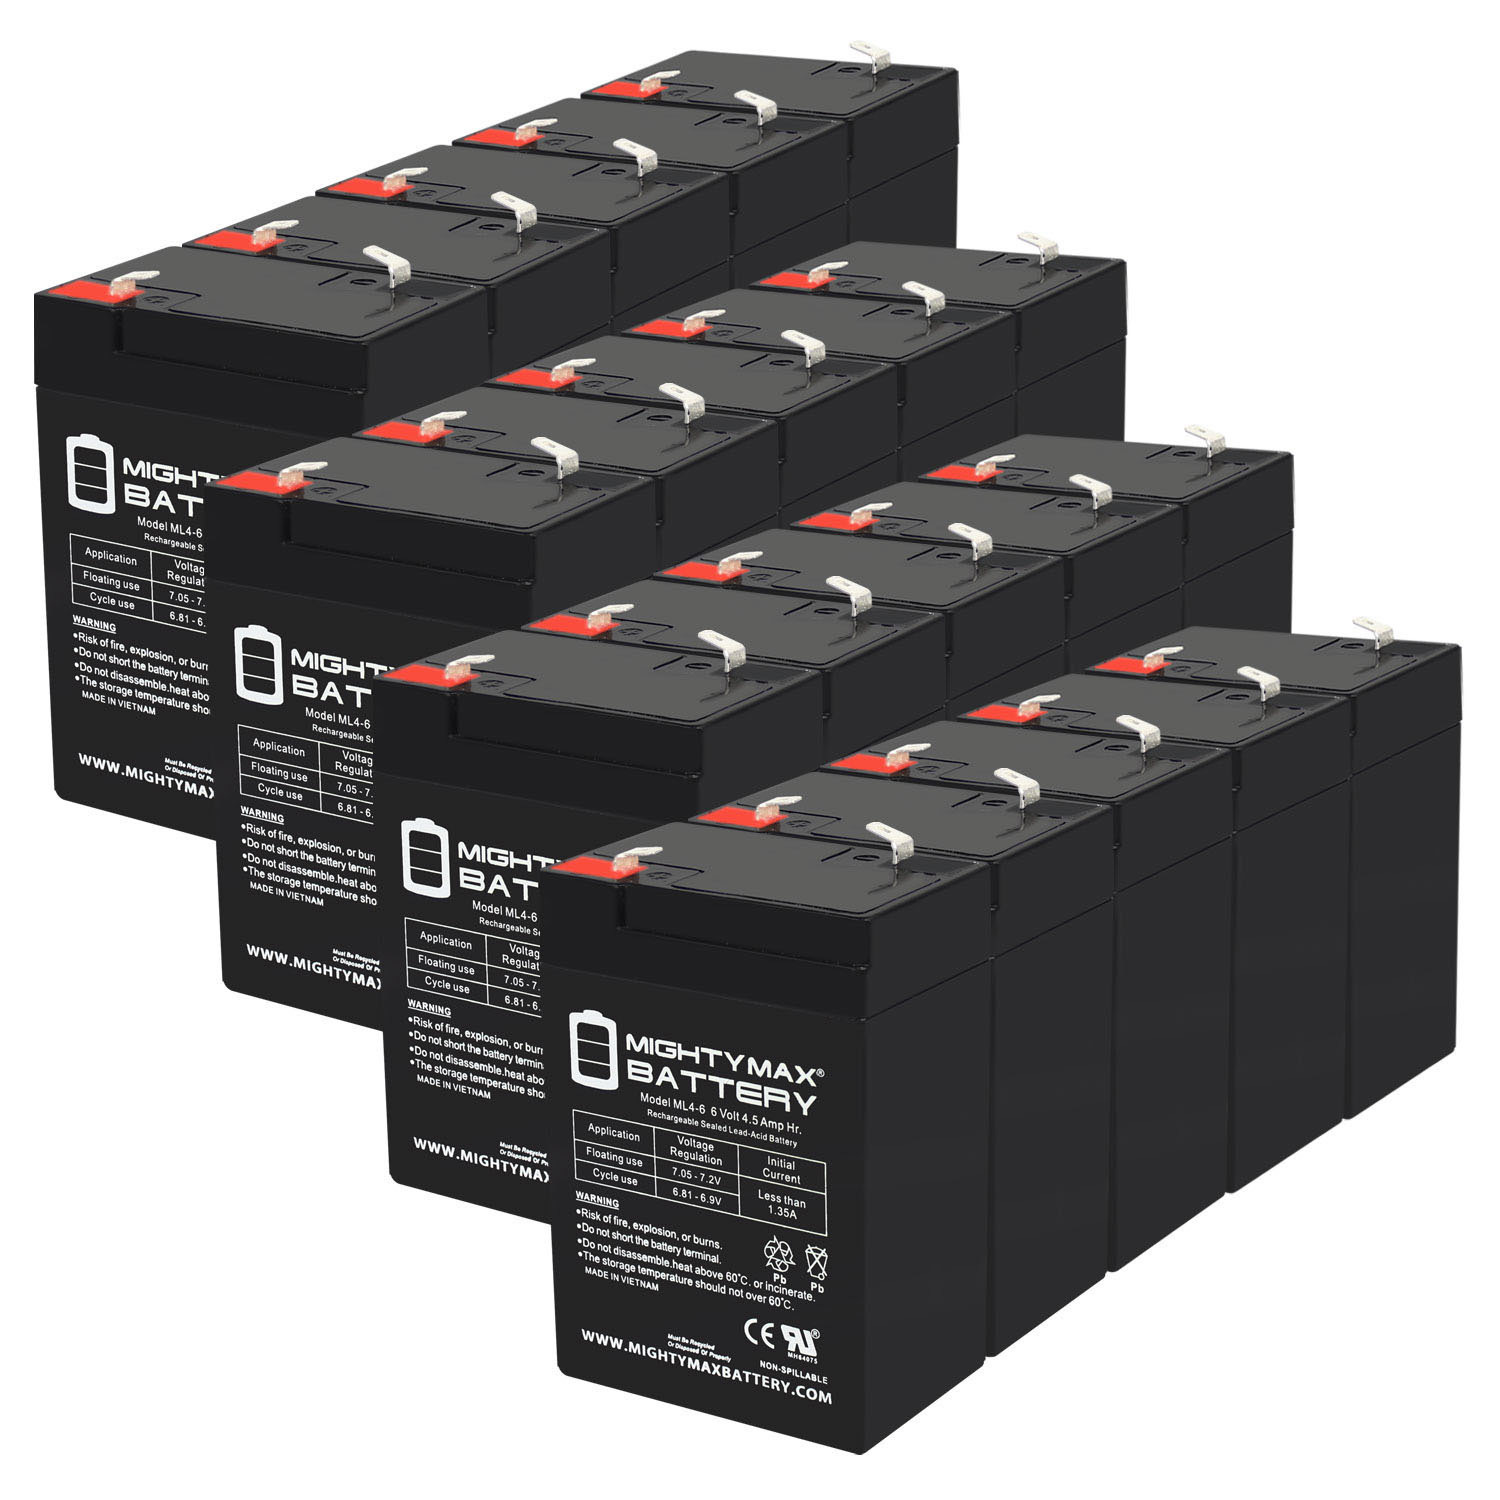 6V 4.5AH SLA Replacement Battery for Dual-Lite CVT3RWI - 20 Pack